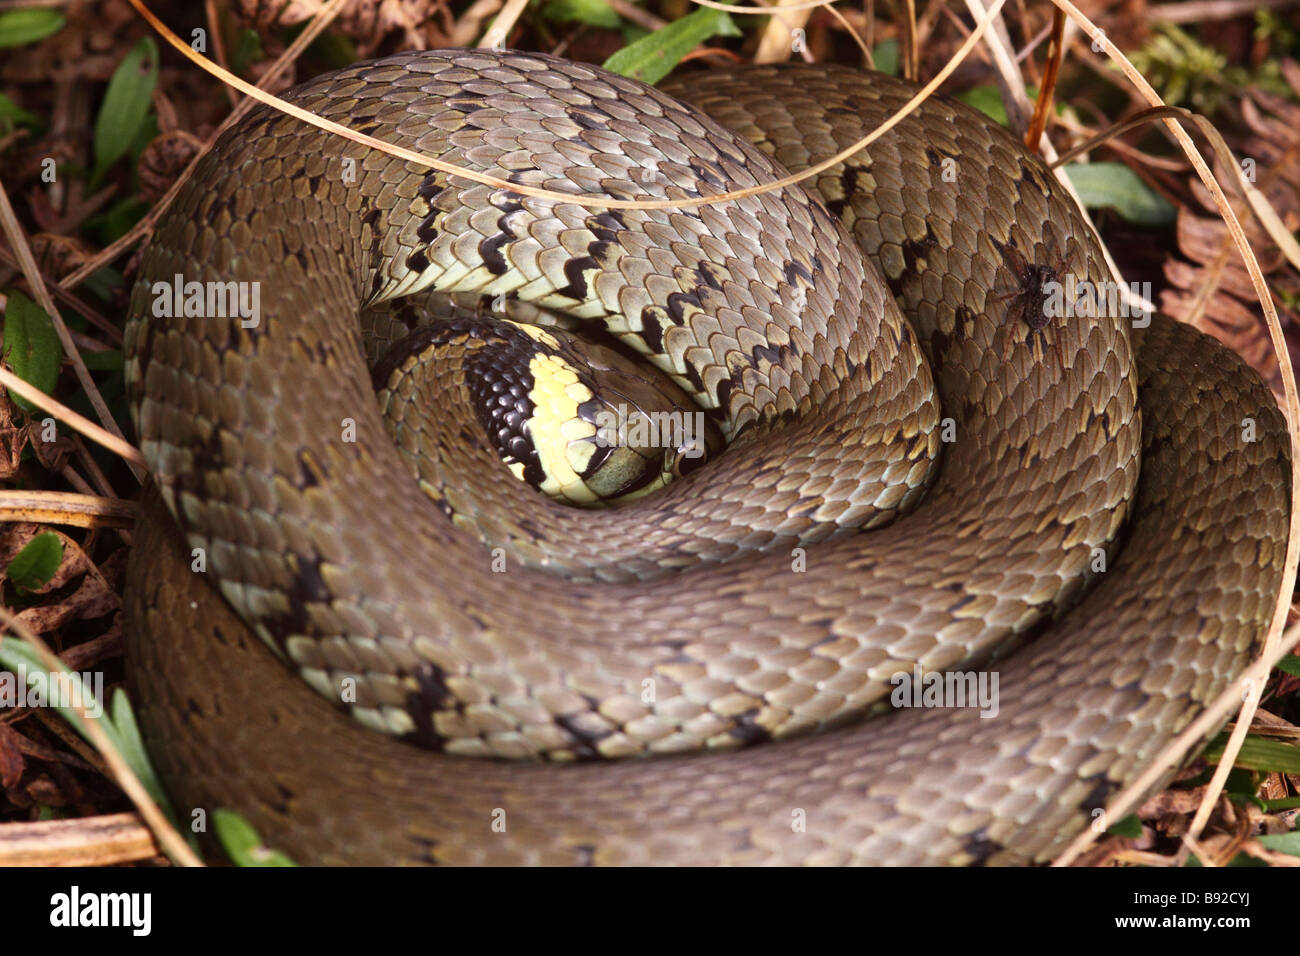 Grass snake natrix natrix coiled in the bracken Stock Photo